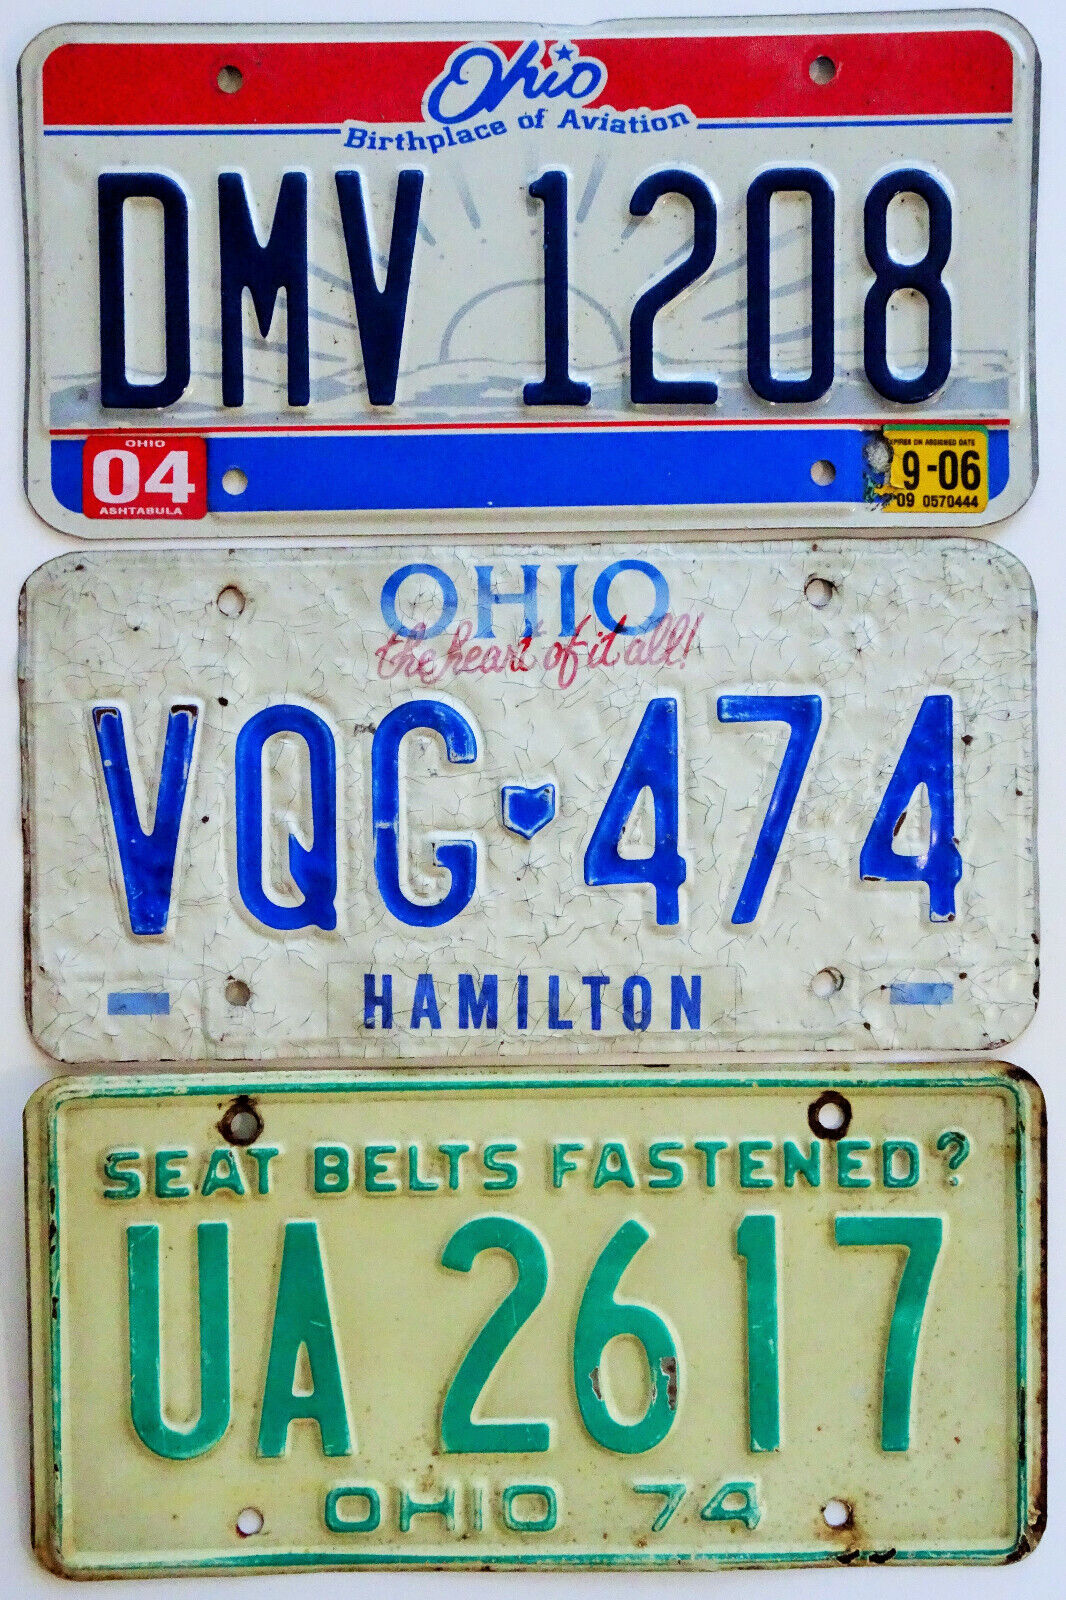 License Plates Ohio Ua2617 1974 Dmv1208 Birthplace Aviation Vqg474 70’s-2000’s